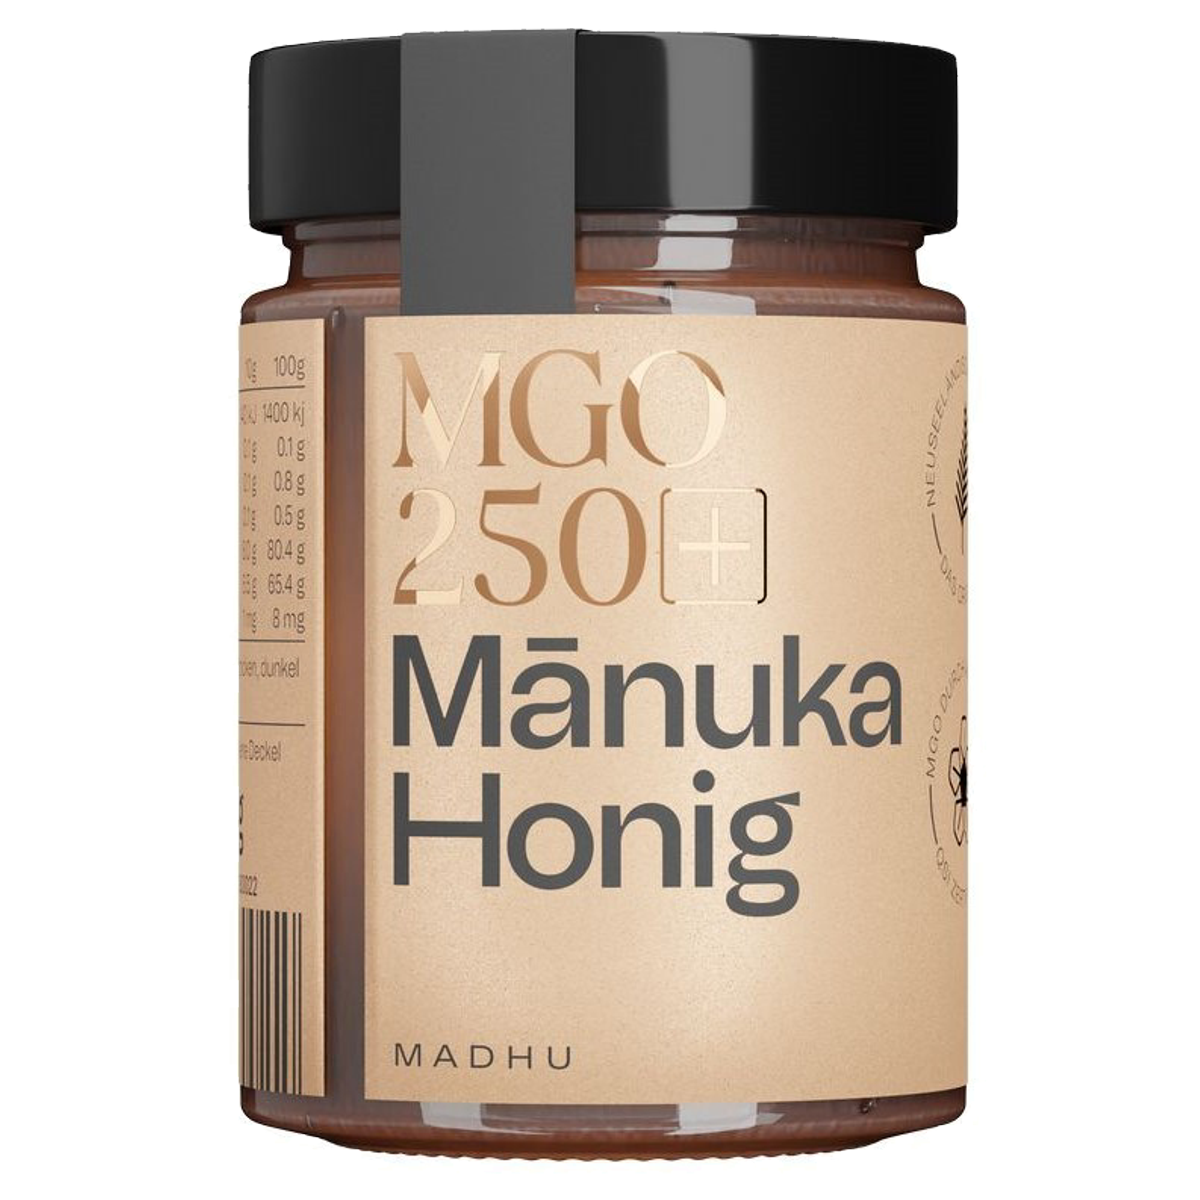 Madhu Honey Manuka Honig MGO250 Glas 500 g